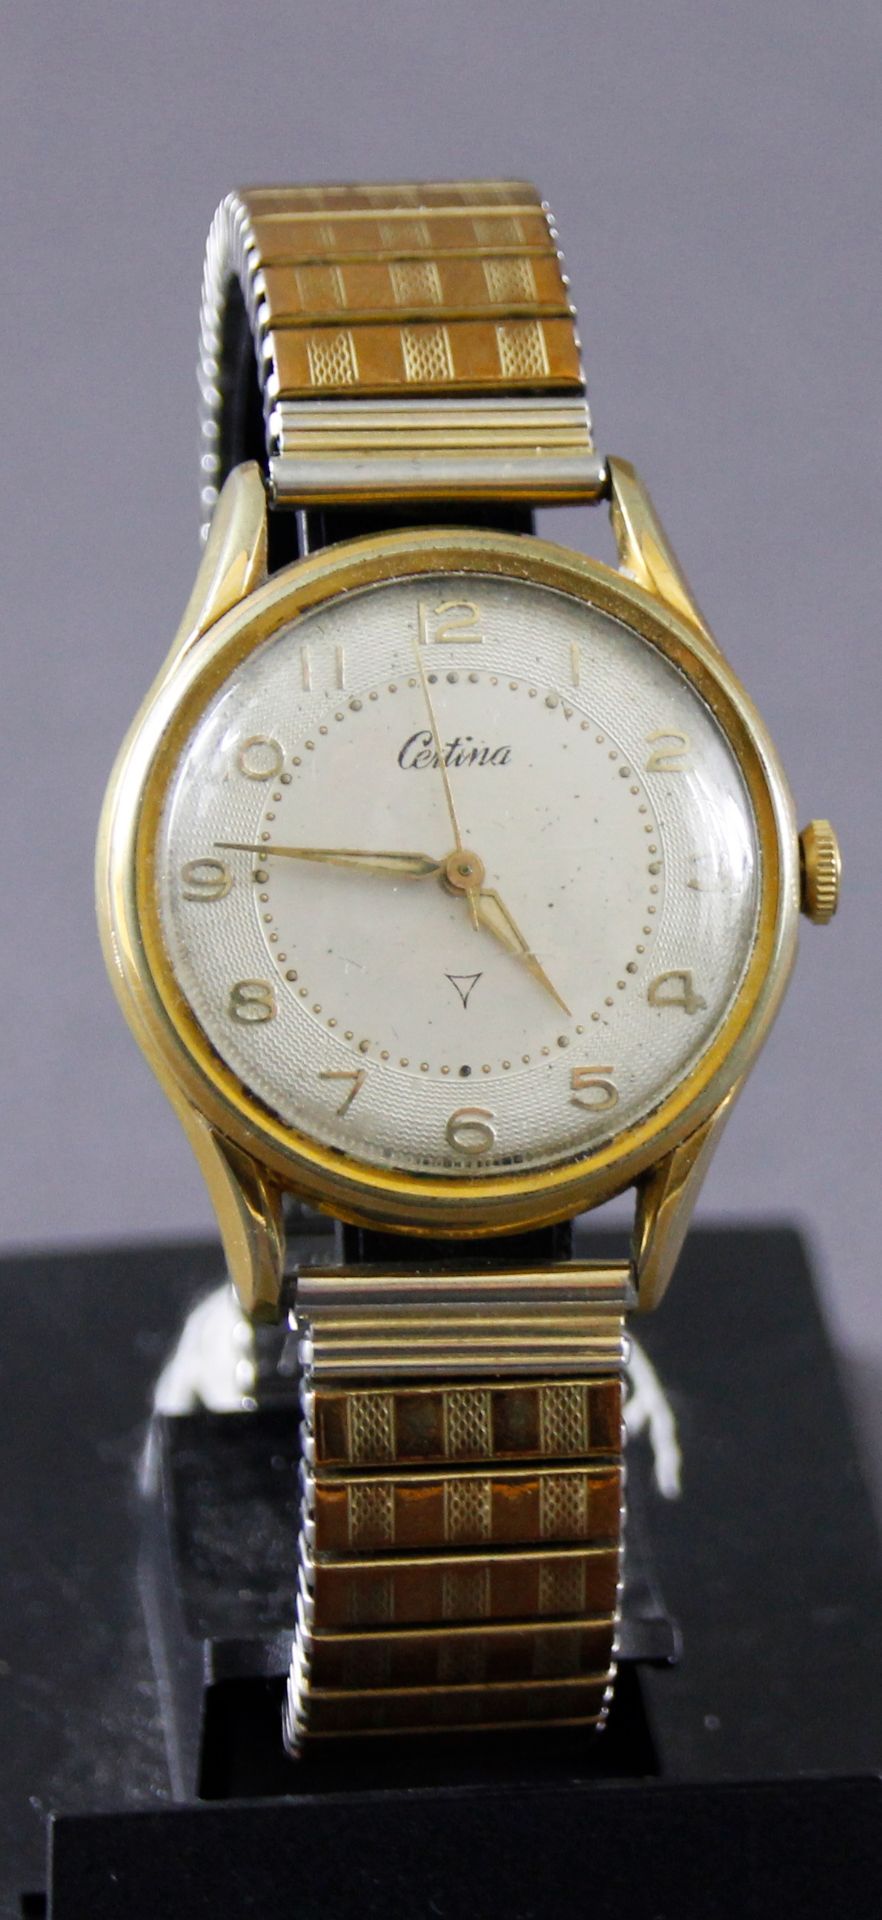 Vintage Herren Armbanduhr, "Certina", Edelstahl, 60er Jahre